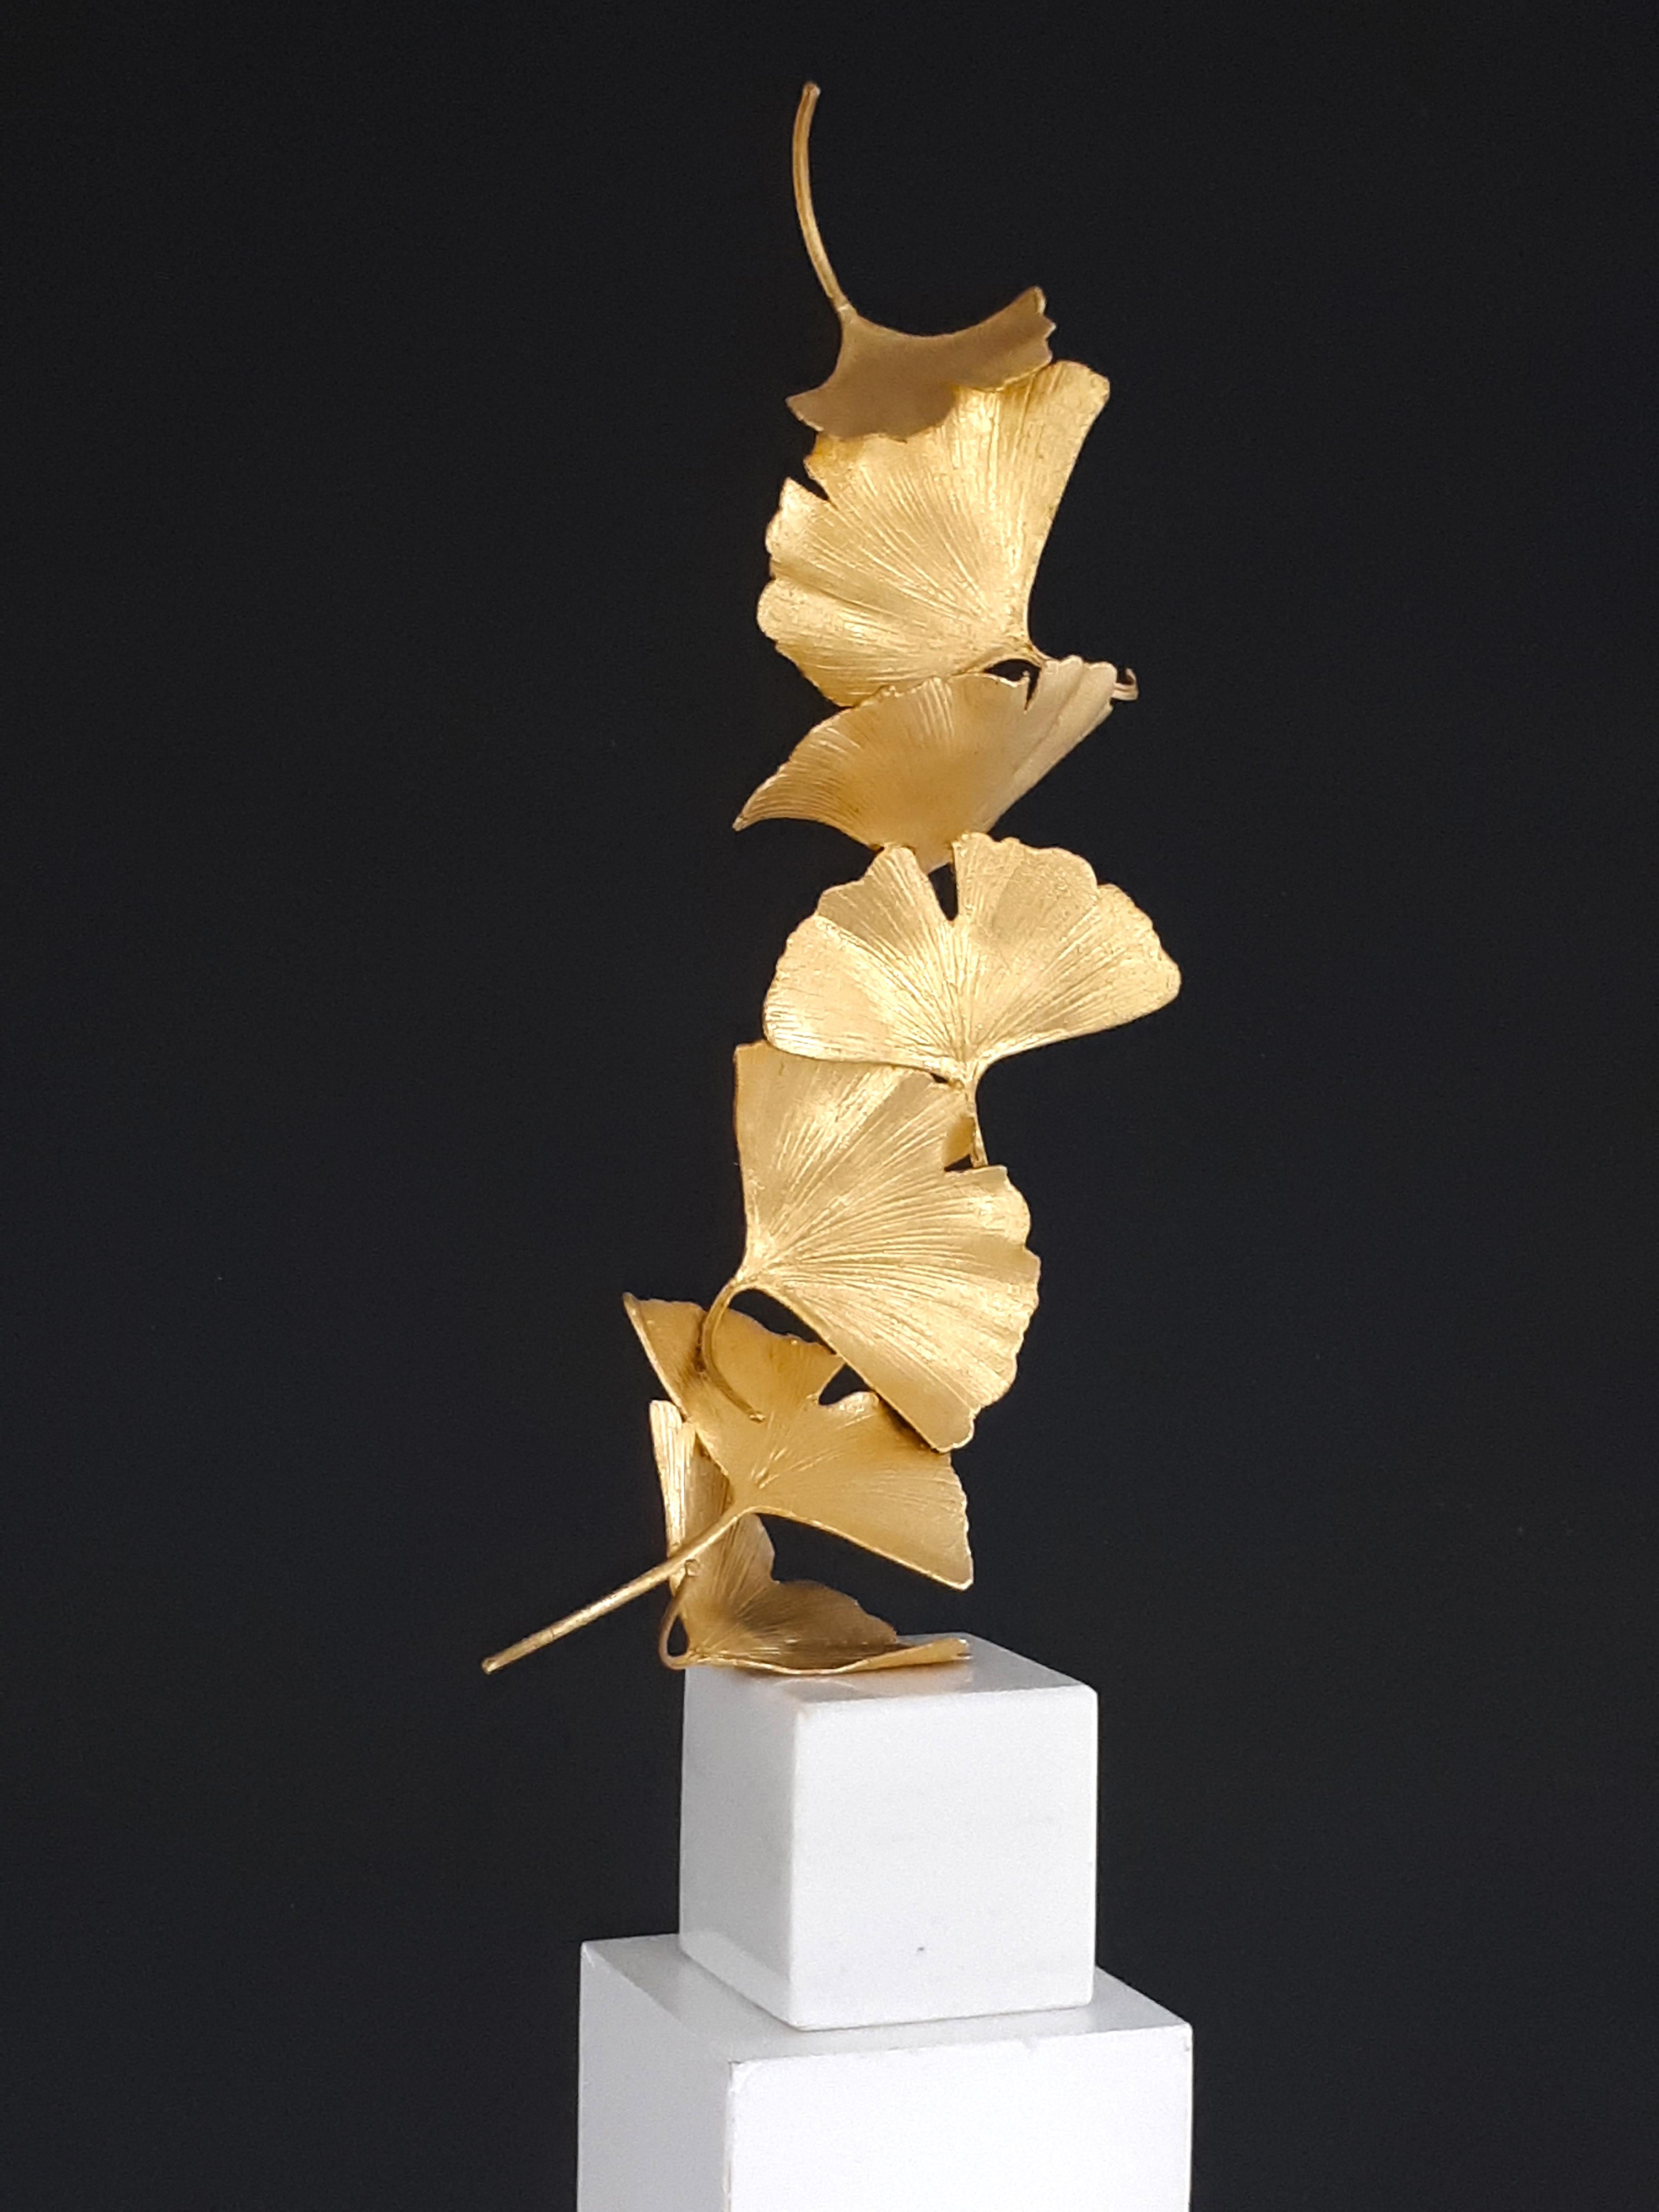 6 Golden Gingko Leaves Kuno Vollet- Cast Brass golden sculpture on white marble For Sale 9